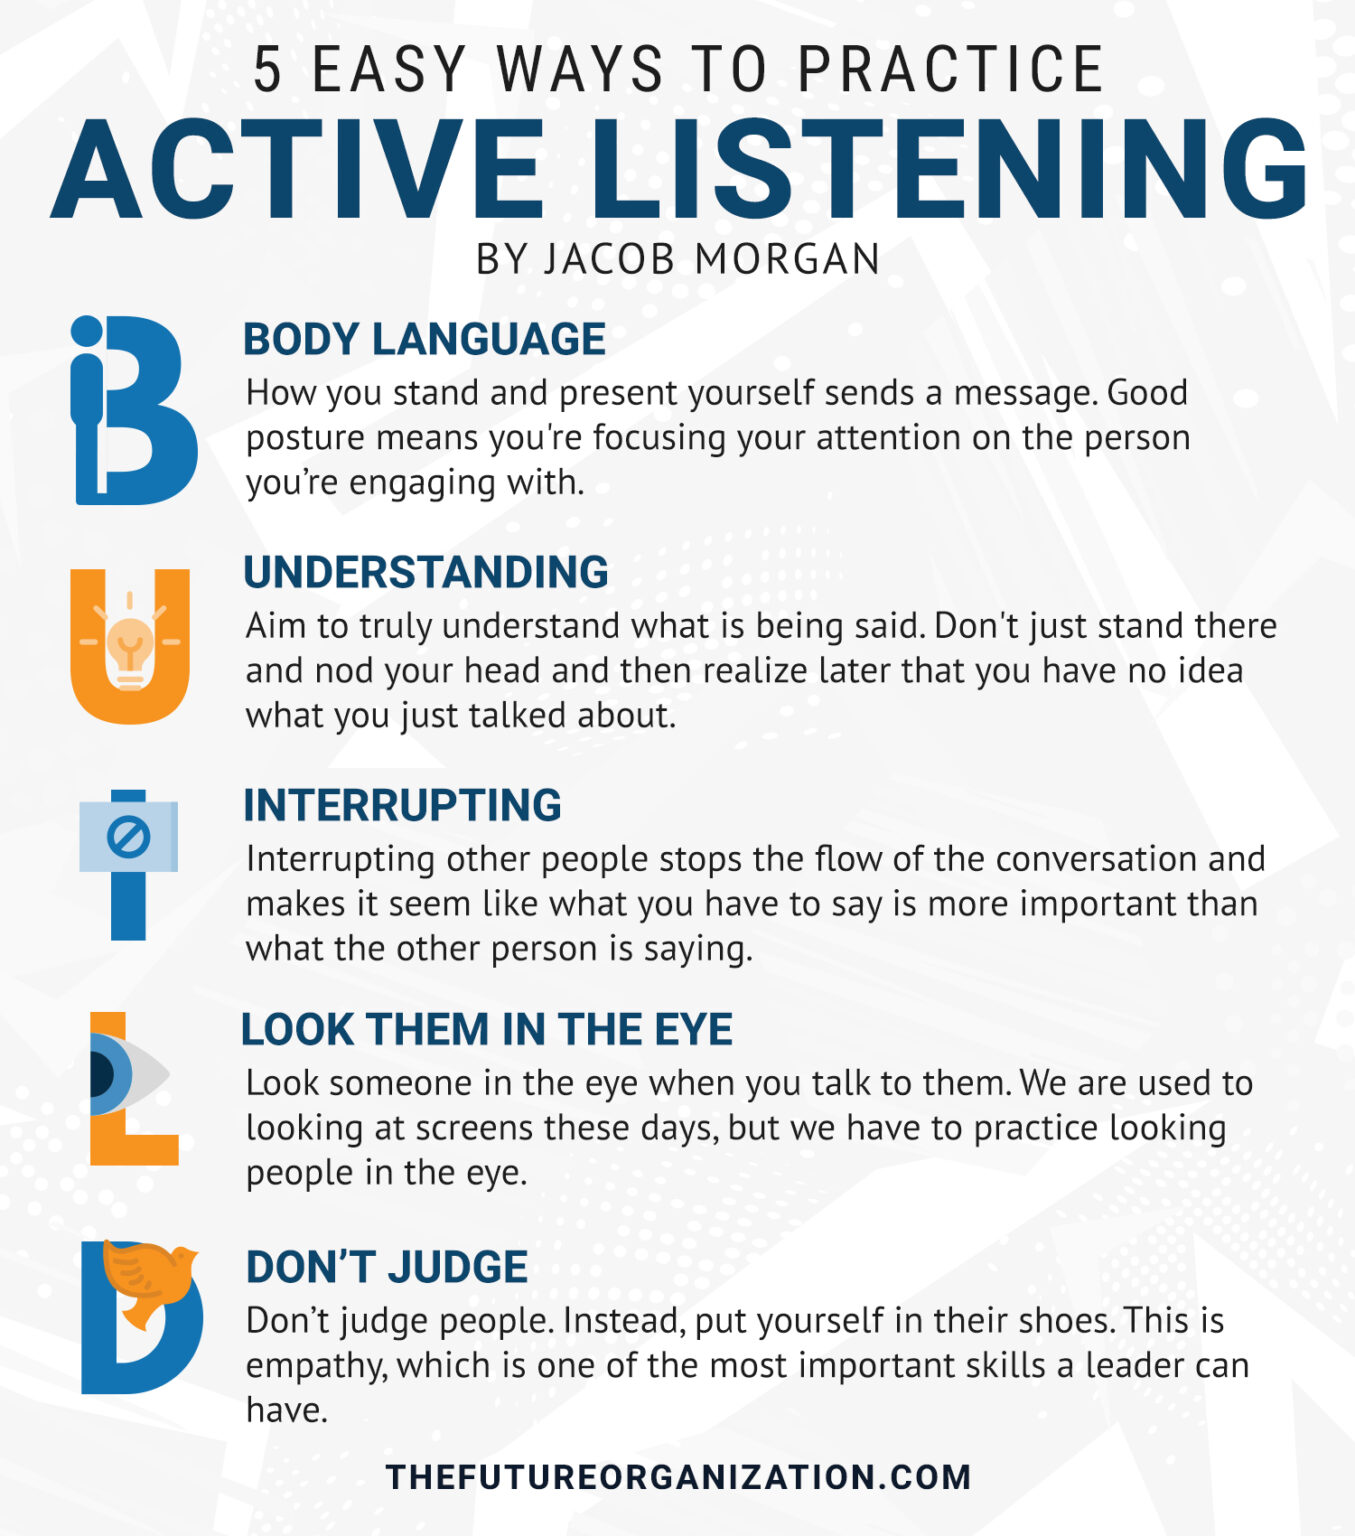 5 Easy Ways to Practice Active Listening